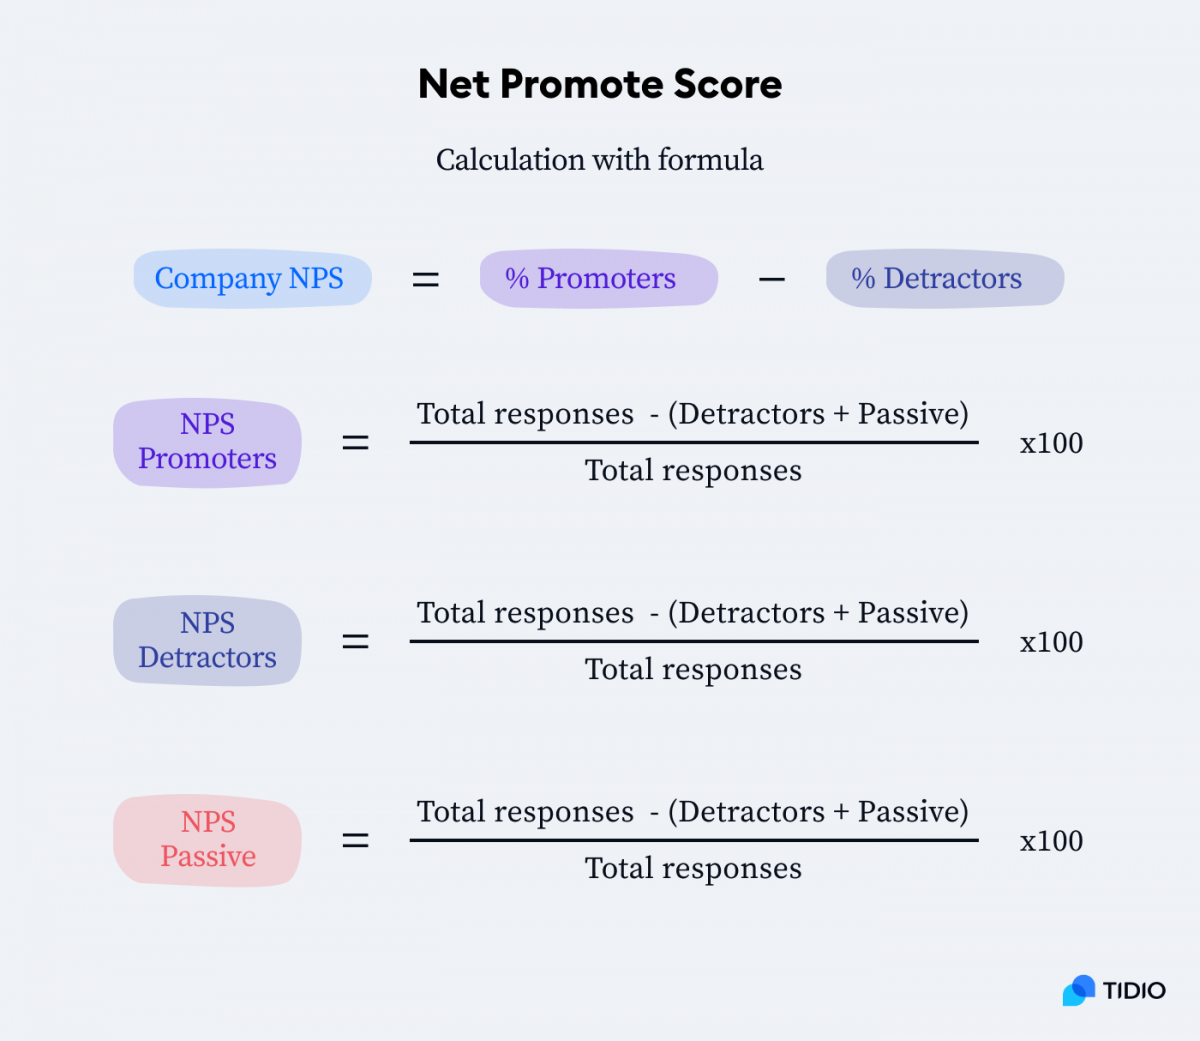 Net Promote Score calculation with formula